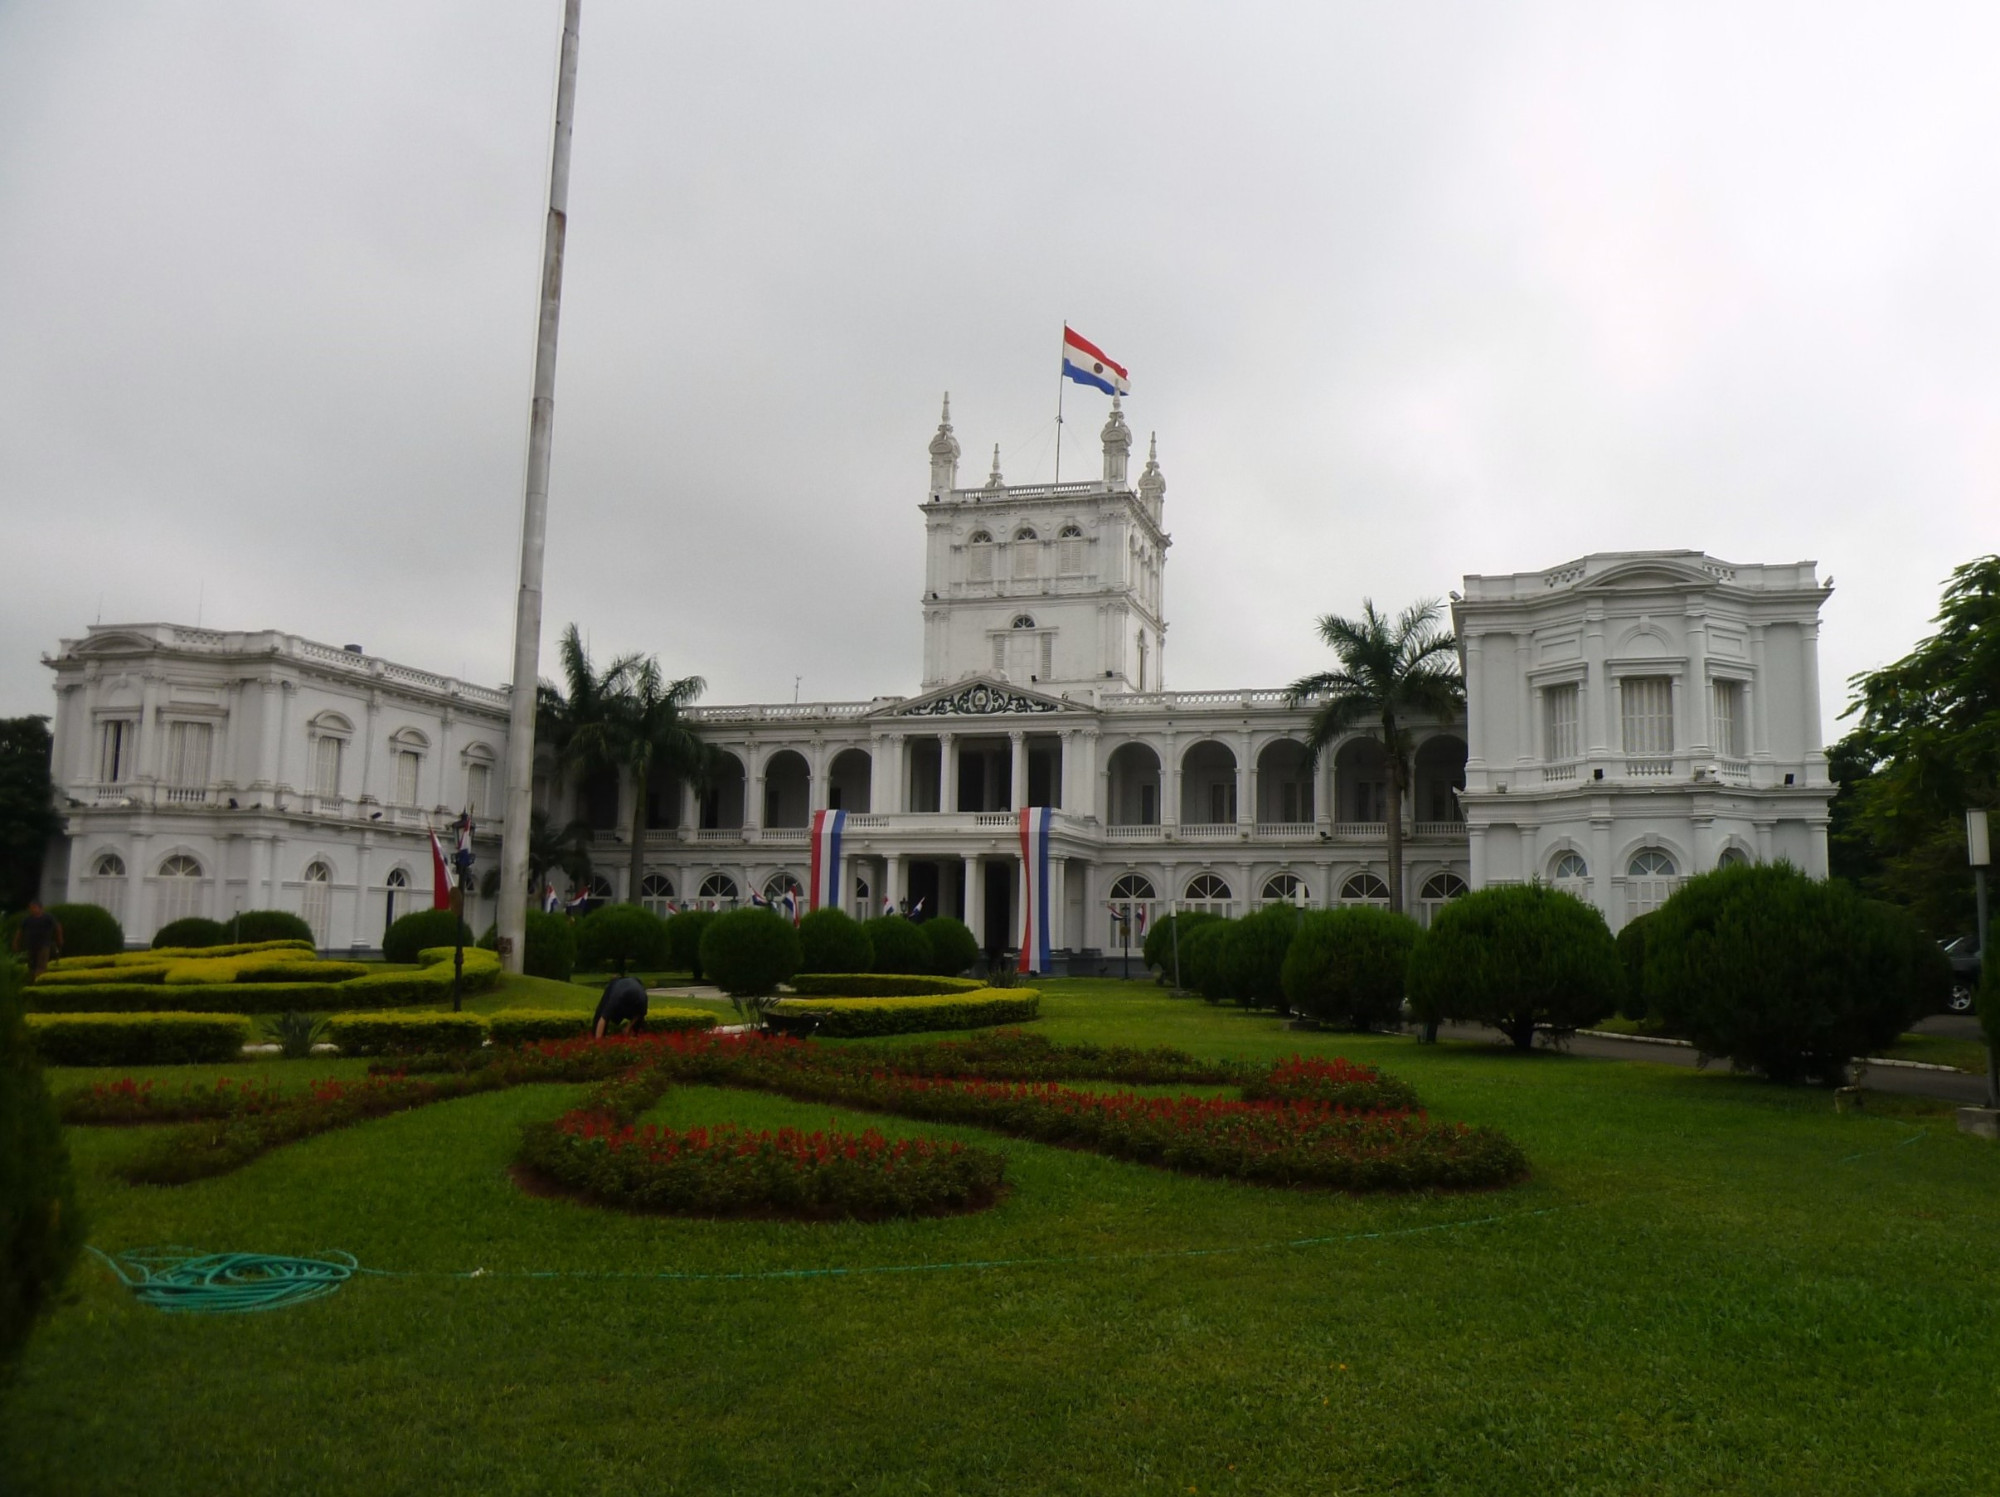 Palacio de López<br/>
State government office